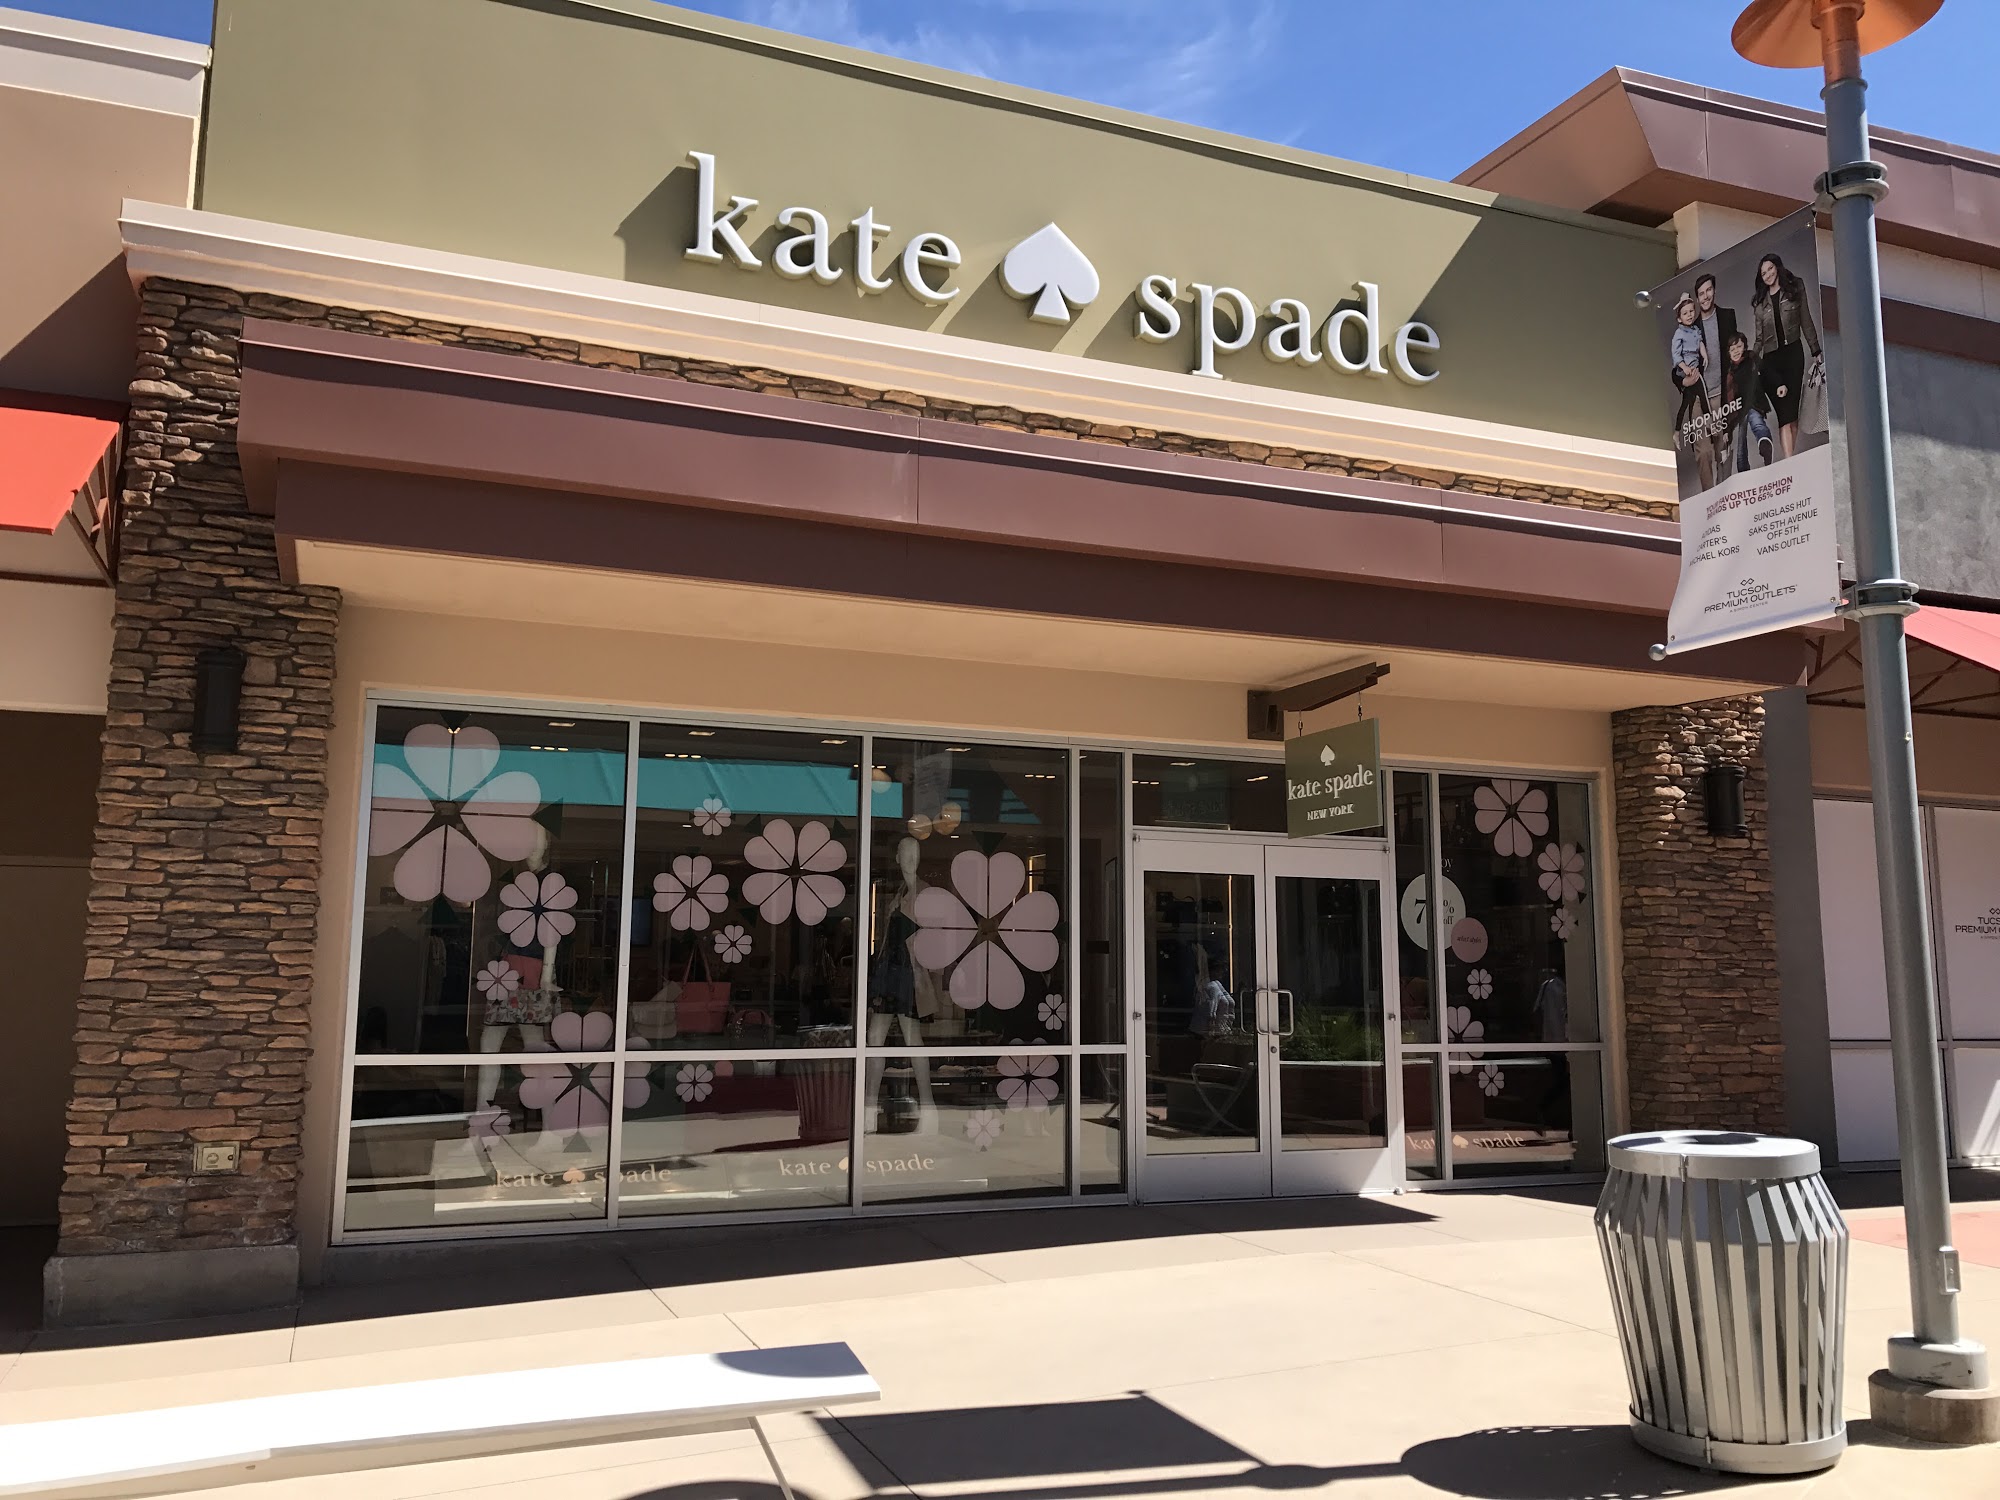 Kate Spade Outlet